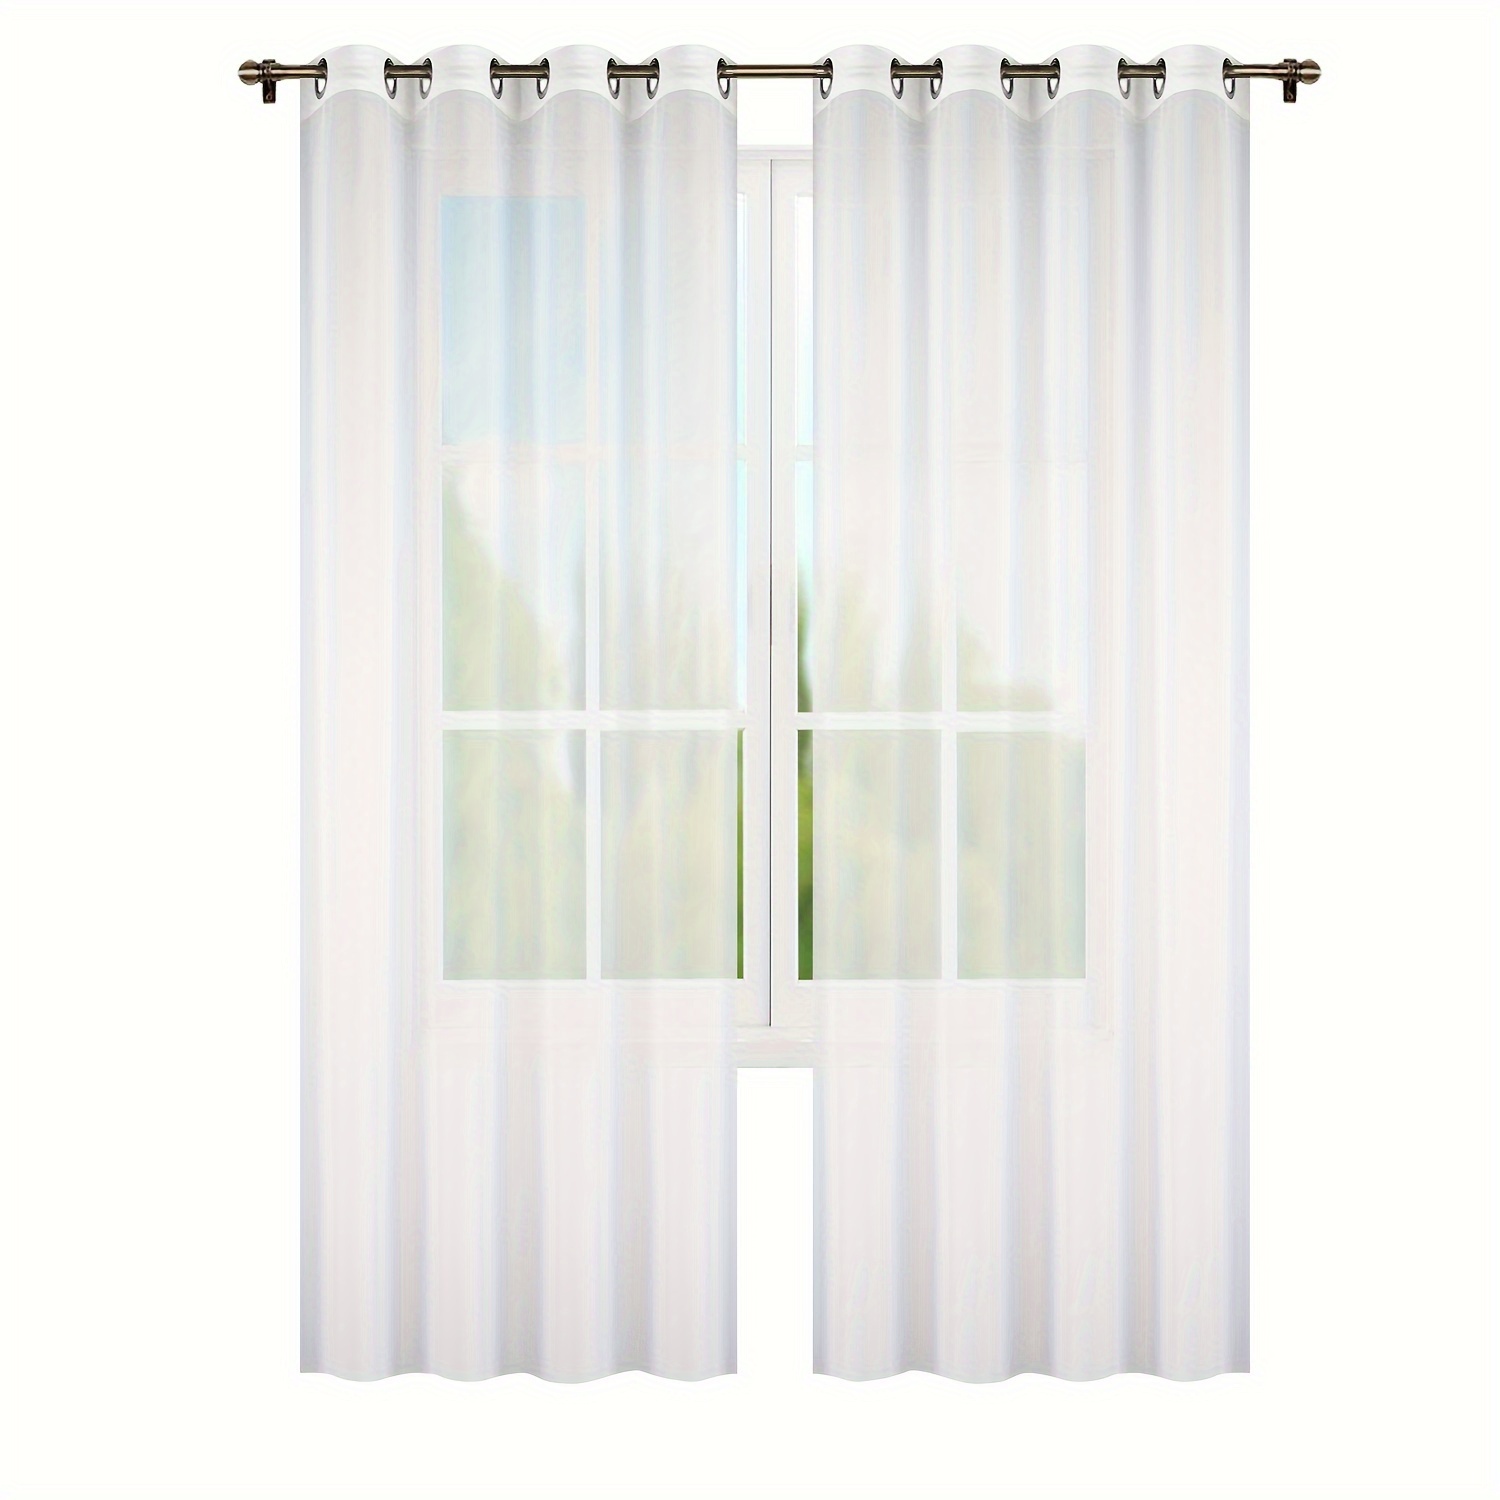 Cortina transparente blanca para decoración de ventanas, cortinas